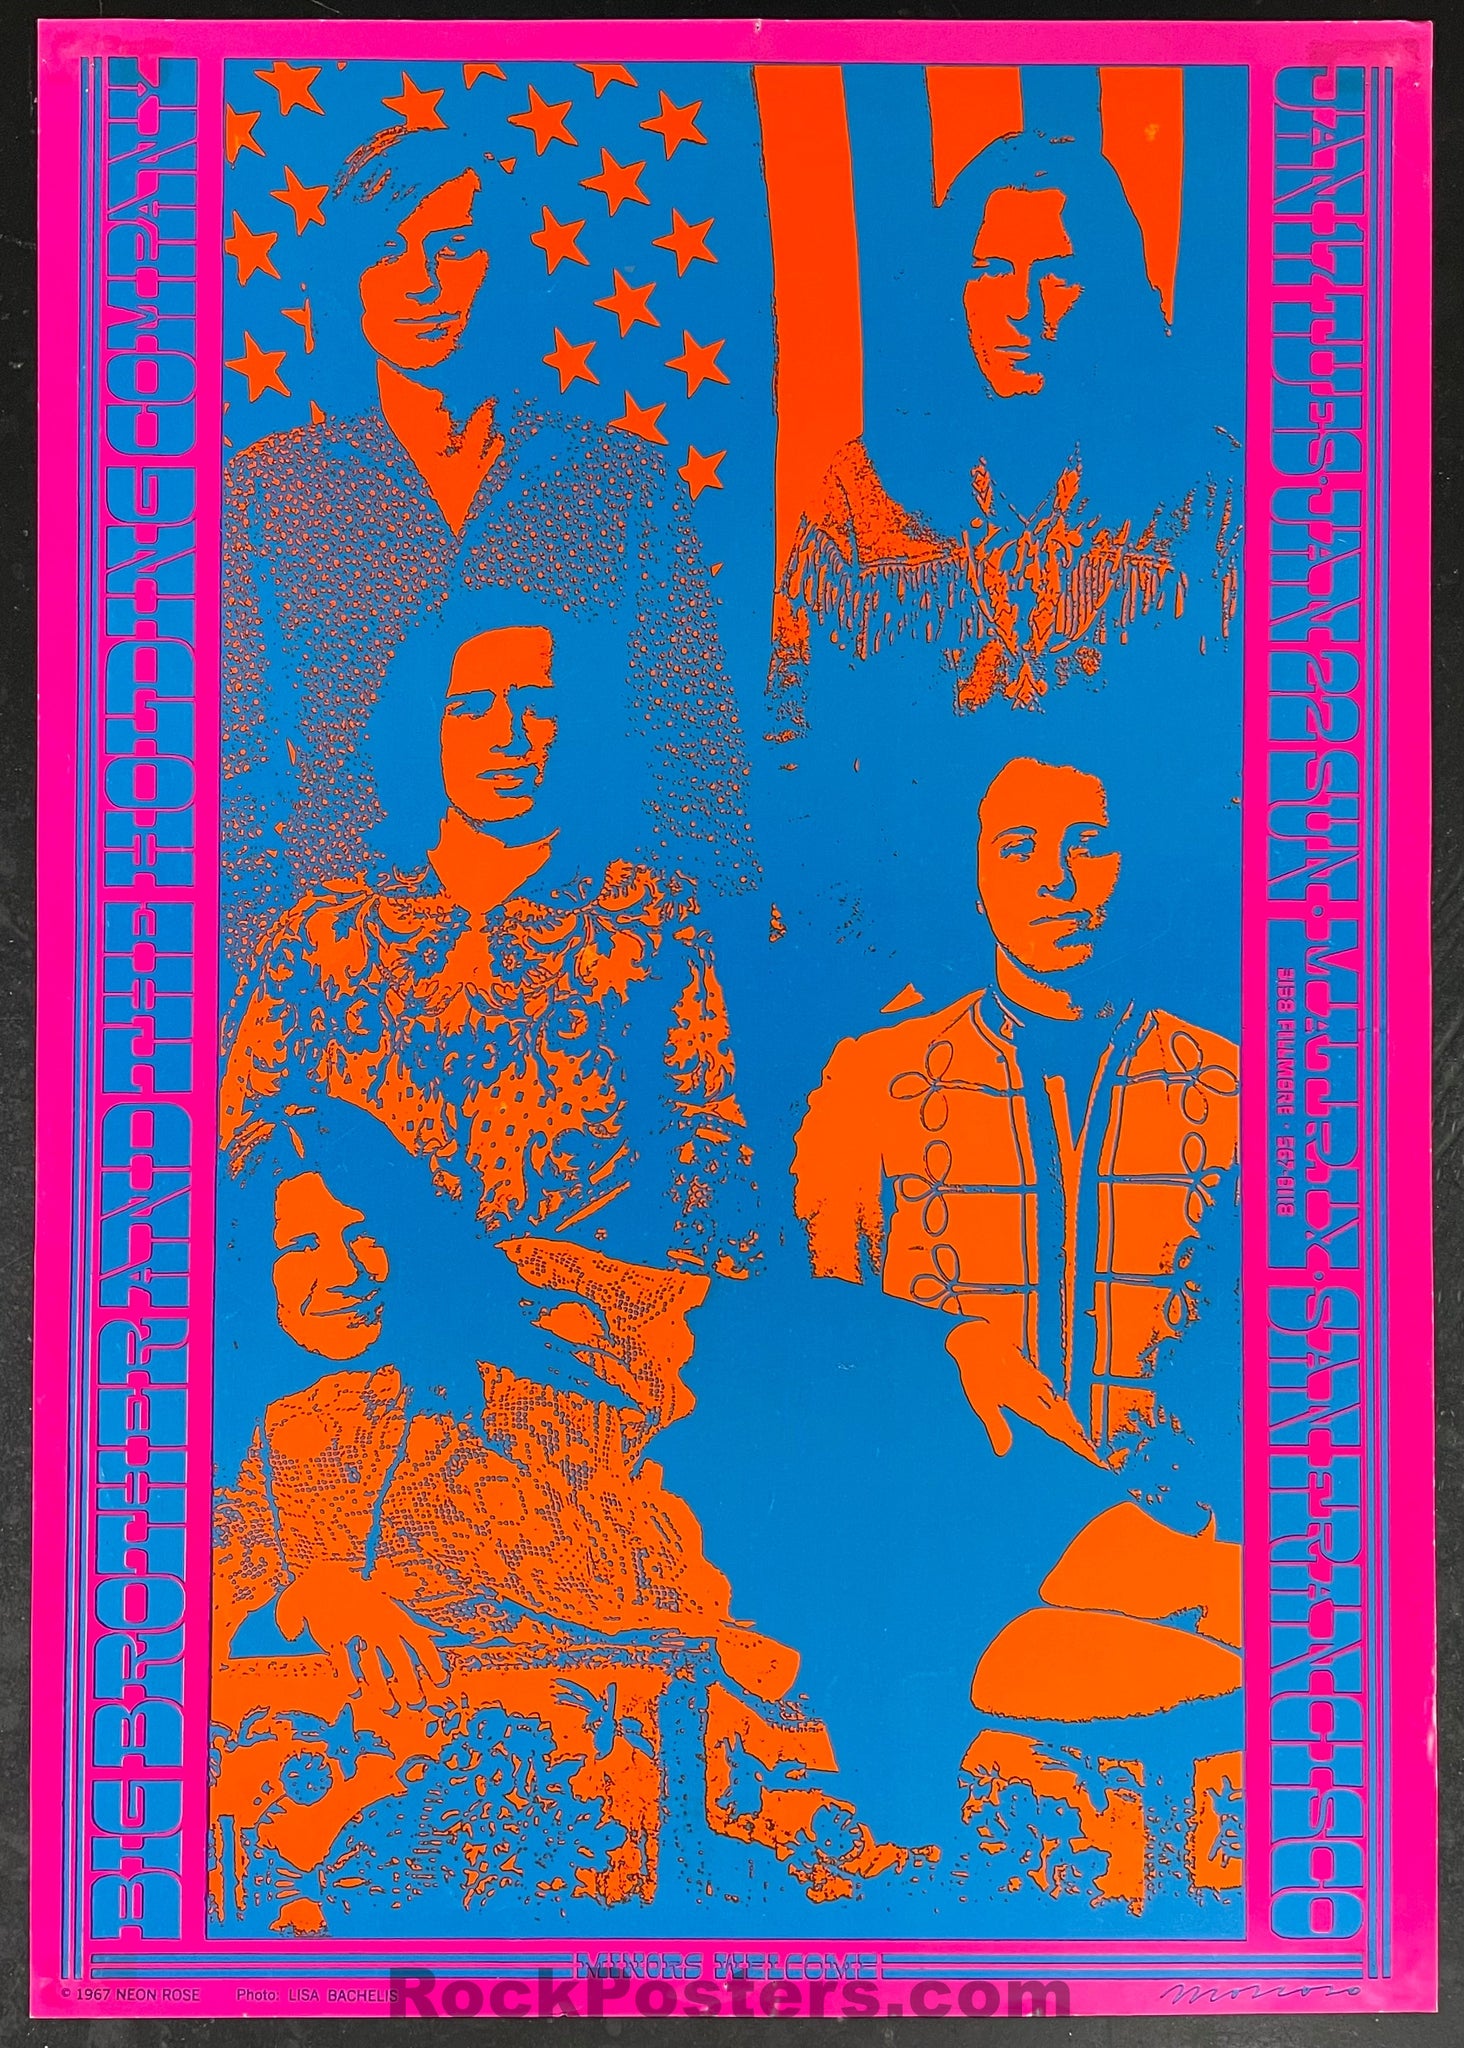 AUCTION - AOR 2.126 - Big Brother Janis Joplin - Neon Rose 3 1967 Poster - Matrix - Very Good